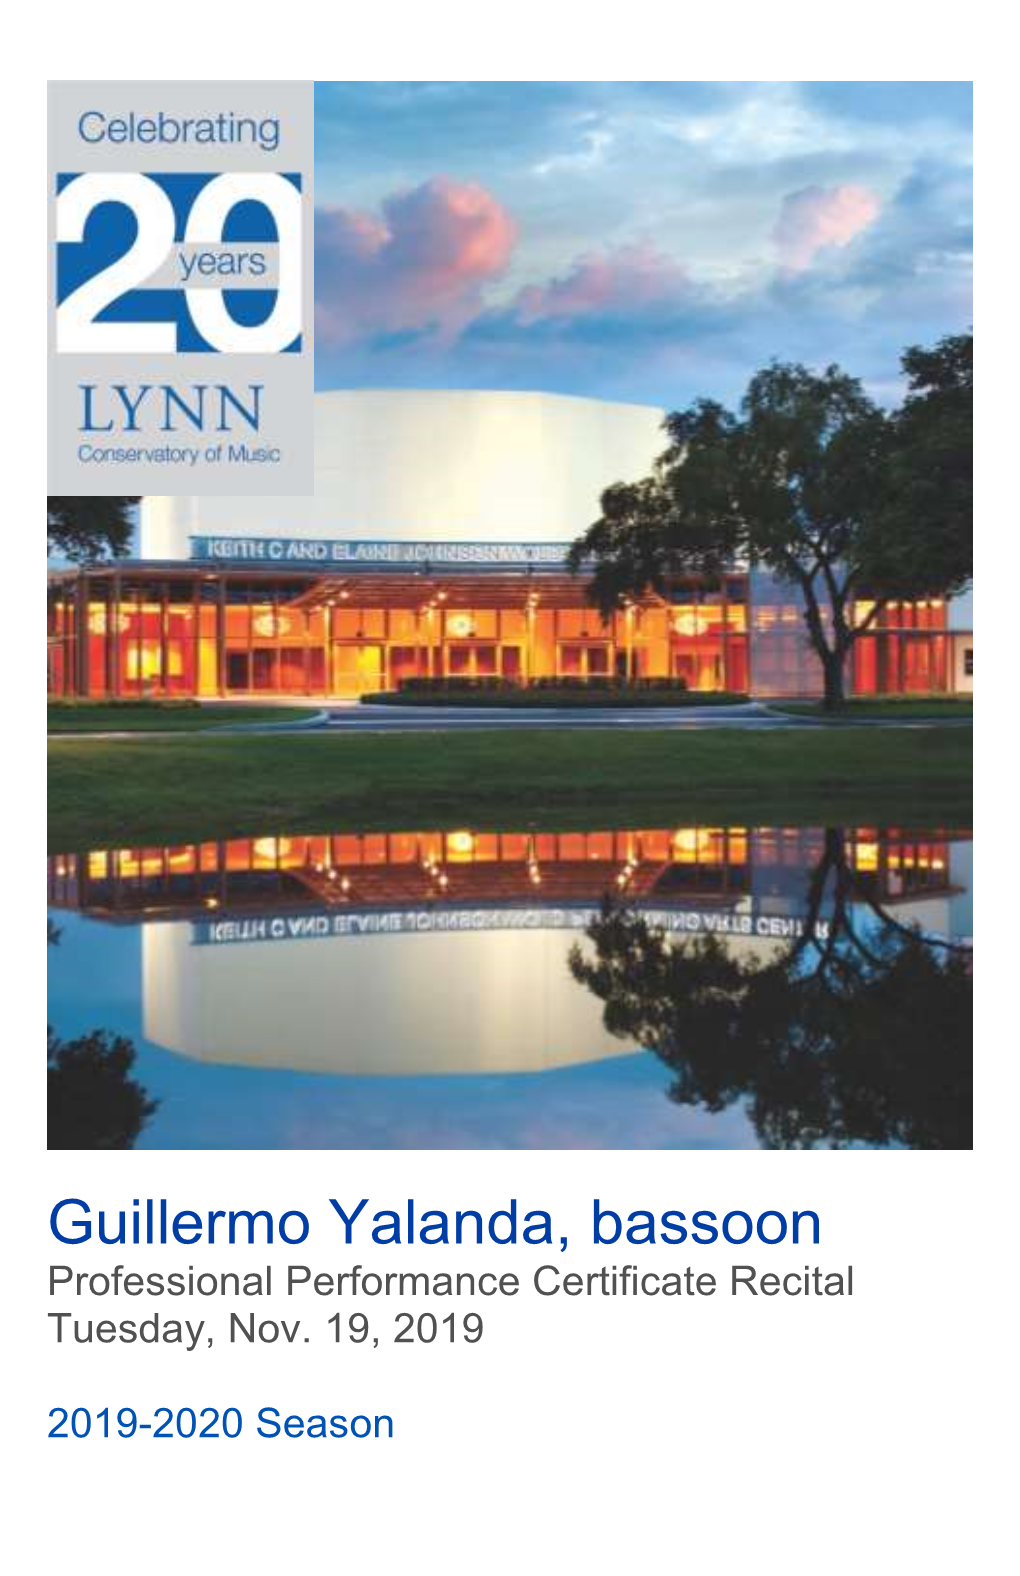 2019-2020 PPC Recital-Guillermo Yalanda (Bassoon)